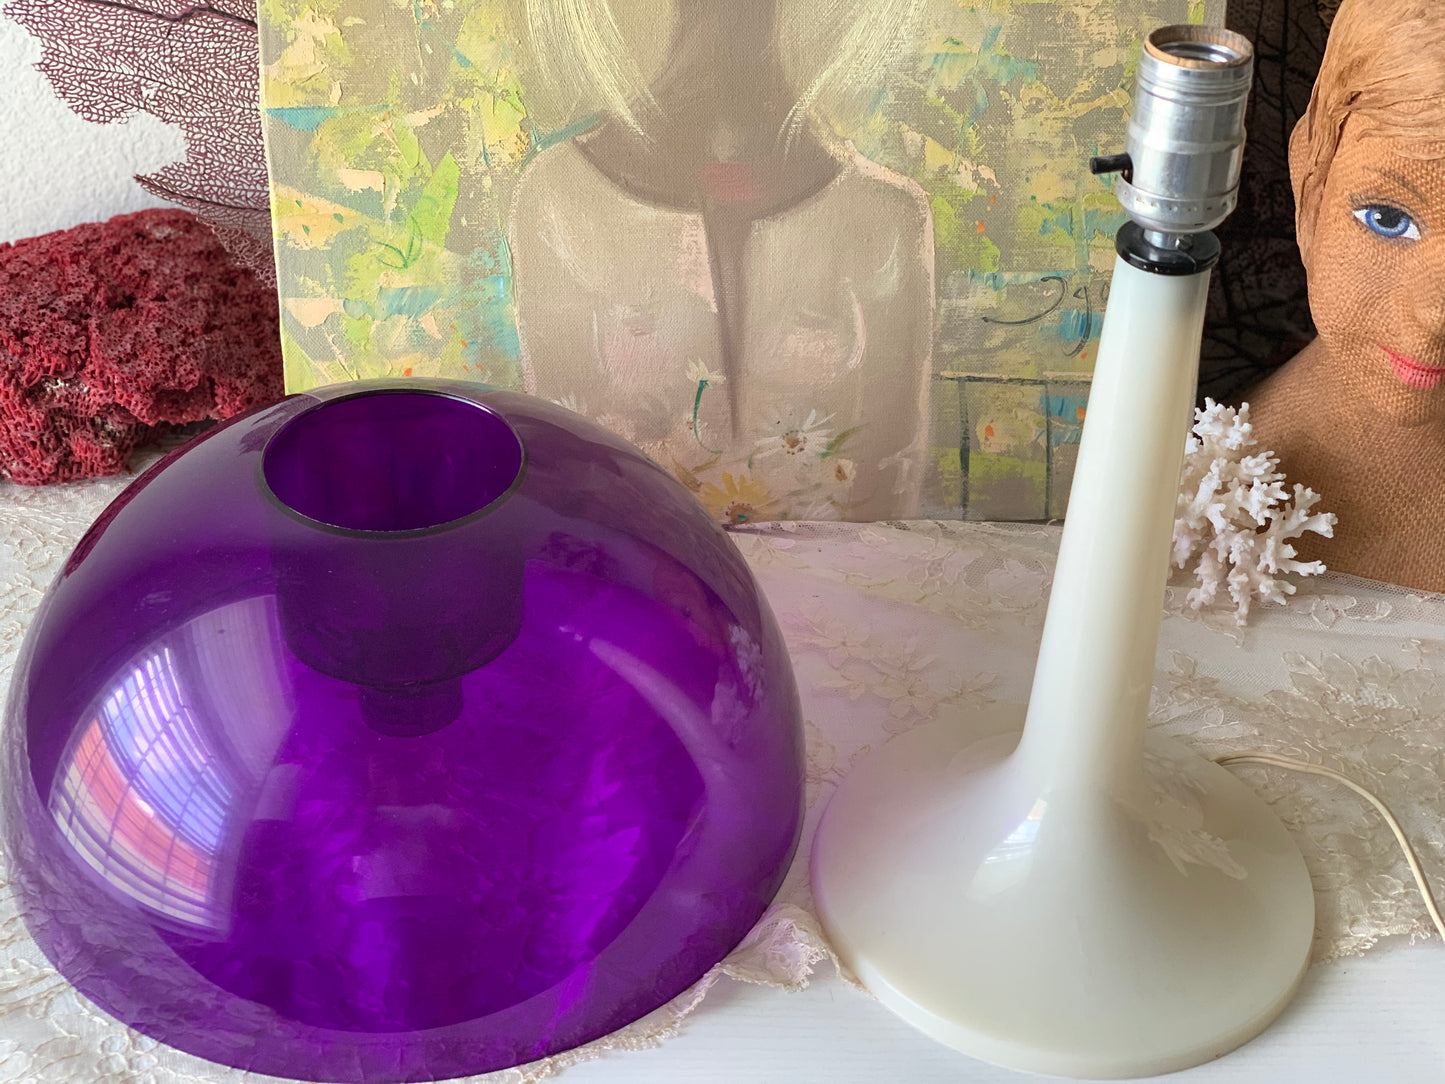 Mid century mushroom lamp Softlite purple white retro atomic table light